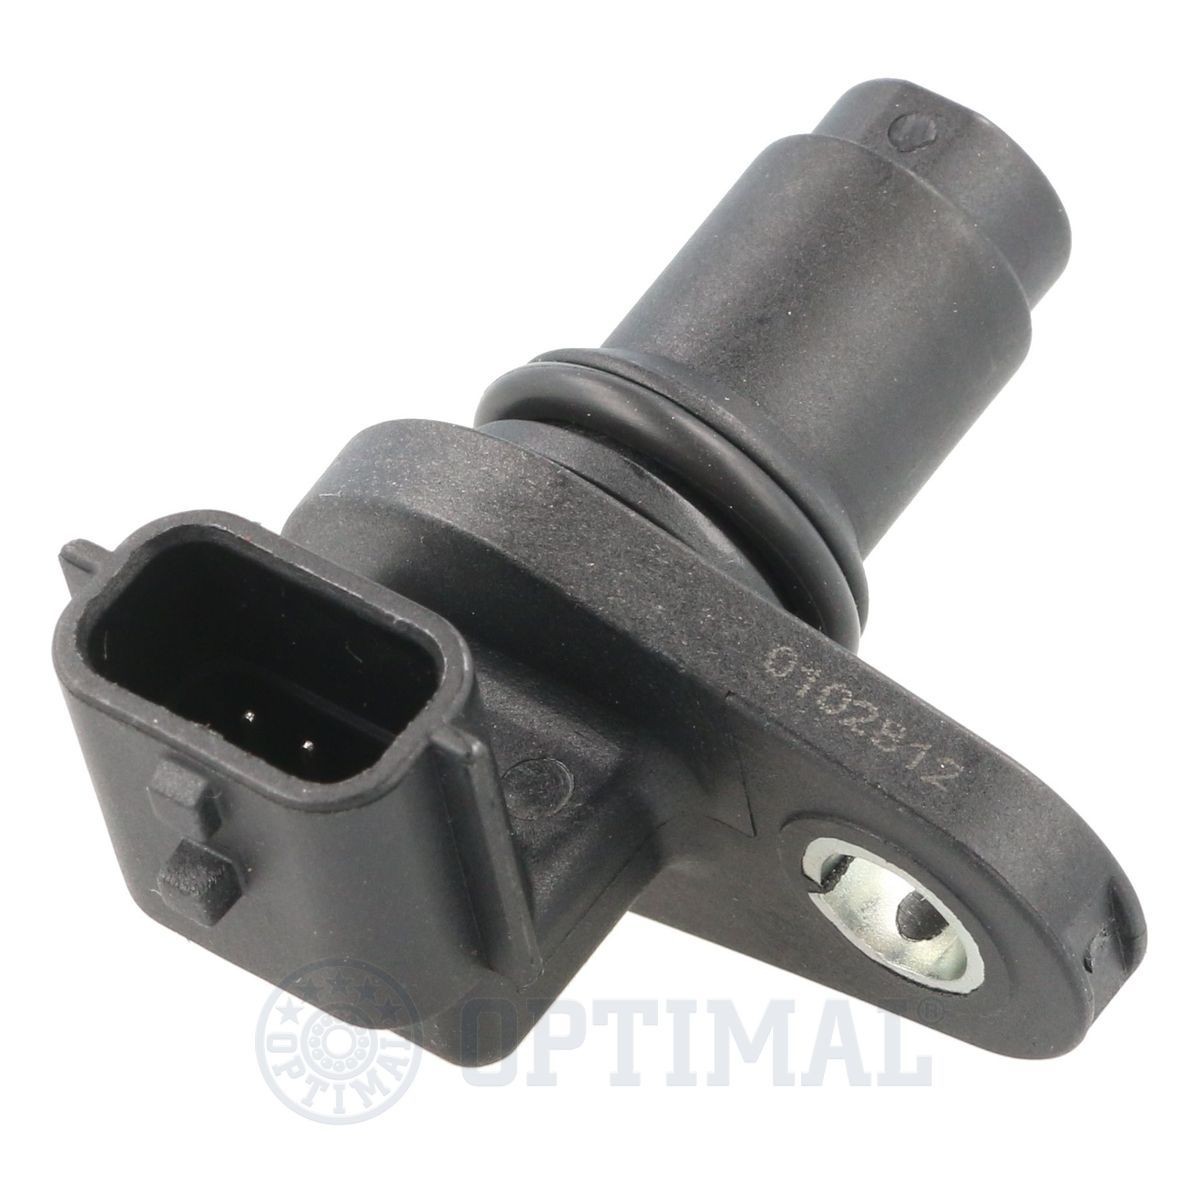 OPTIMAL Crankshaft position sensor 07-S039 for BMW 5 Series, 1 Series, 3 Series